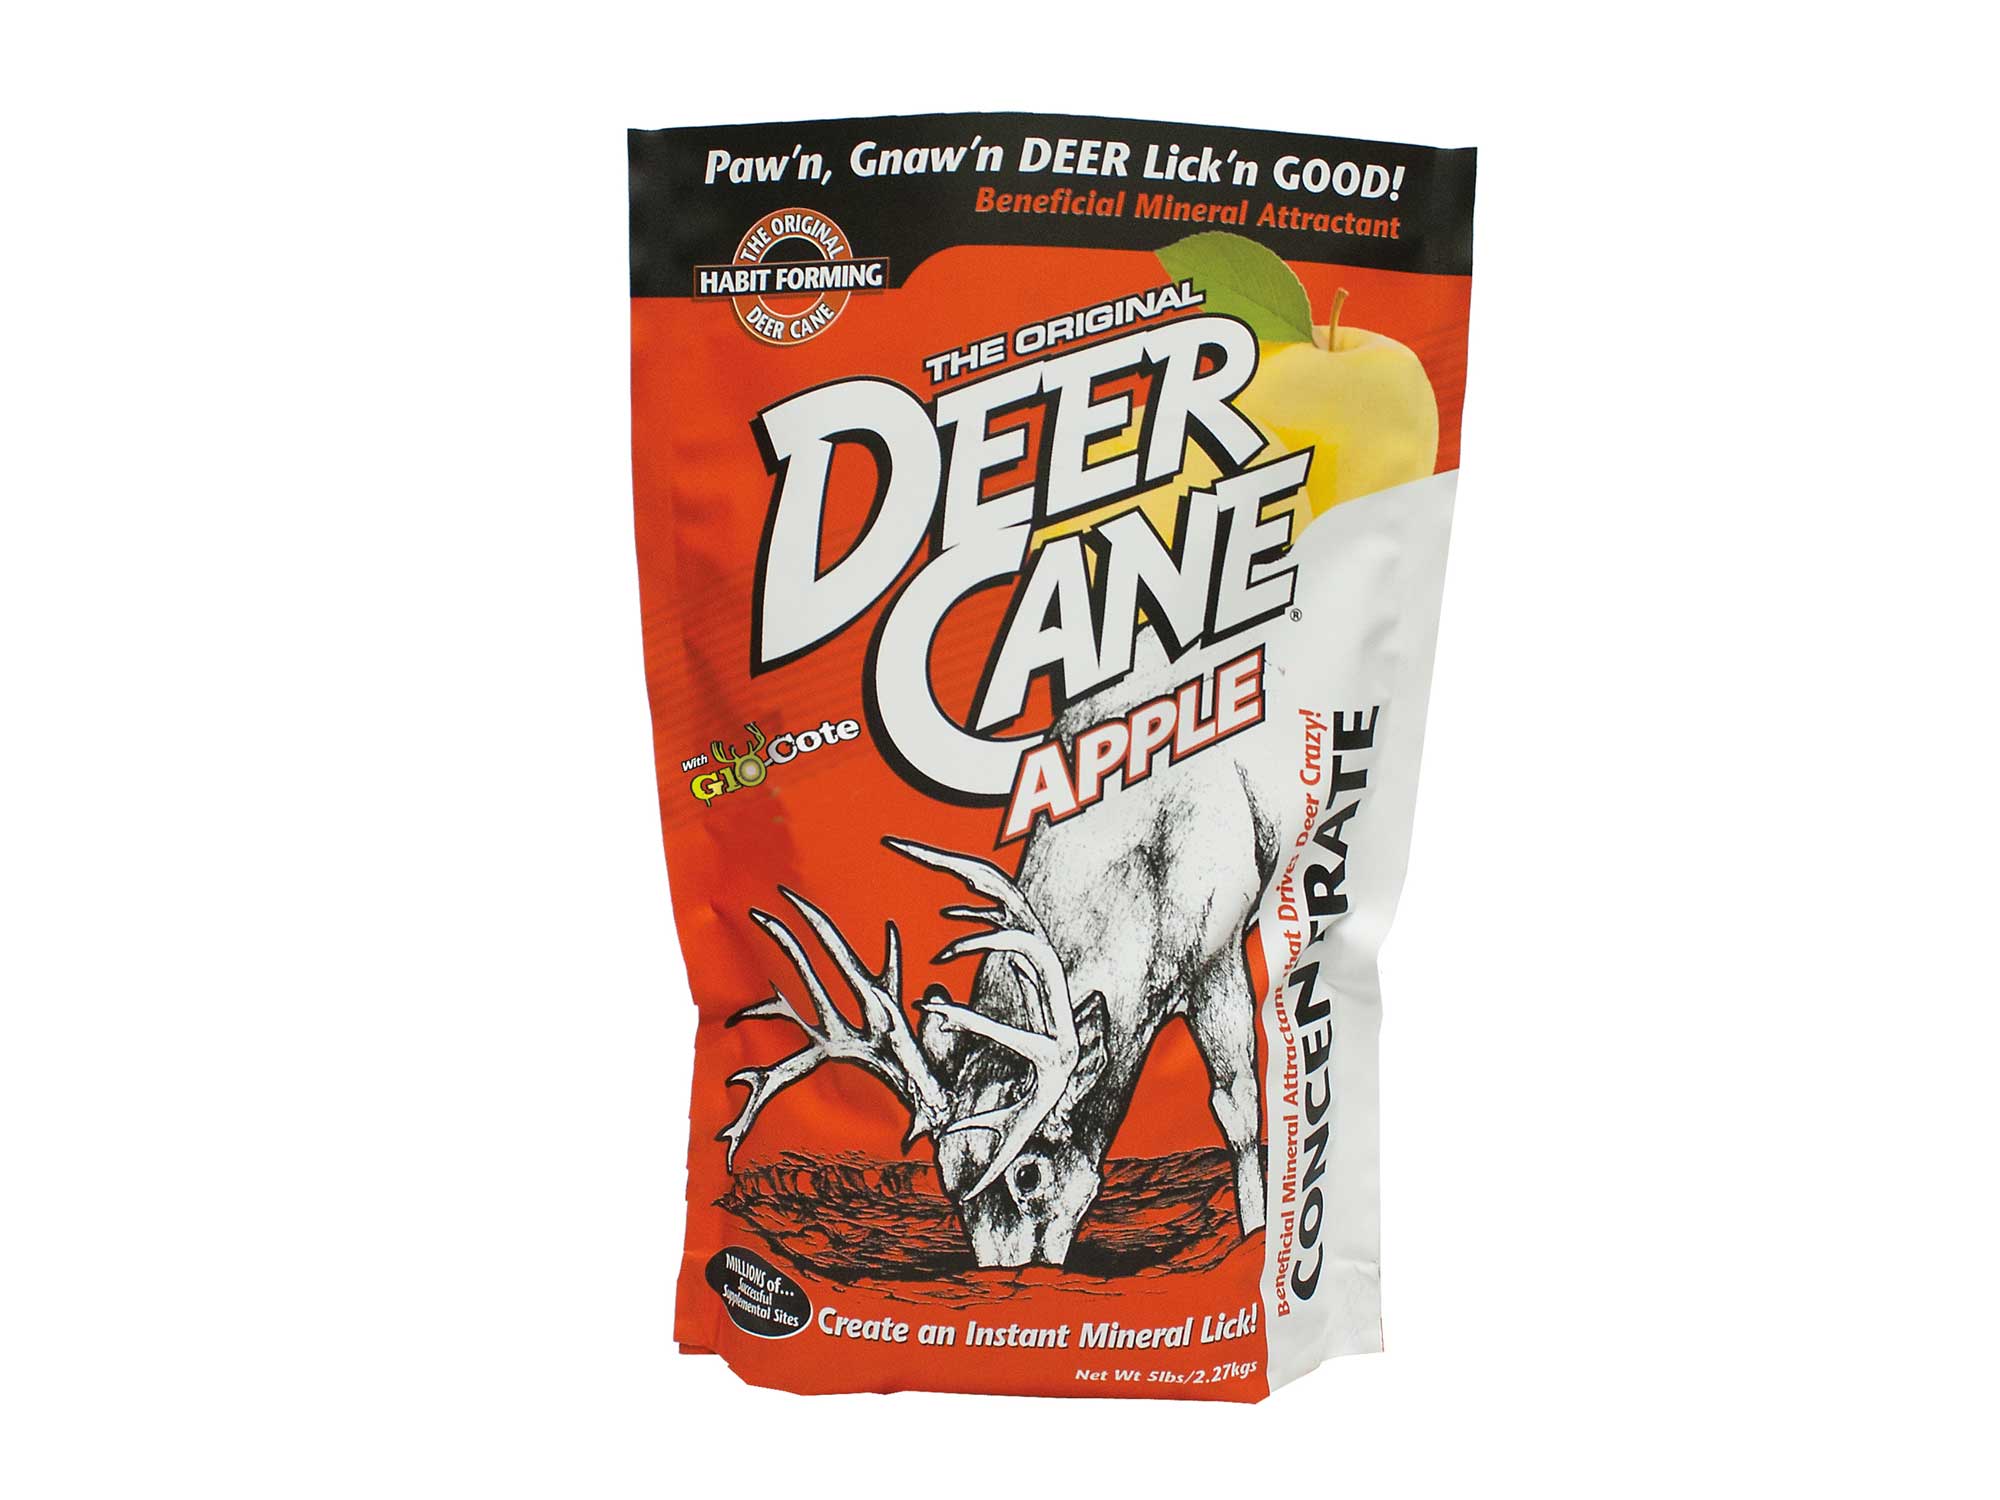 Apple-flavored Deer Cane powder